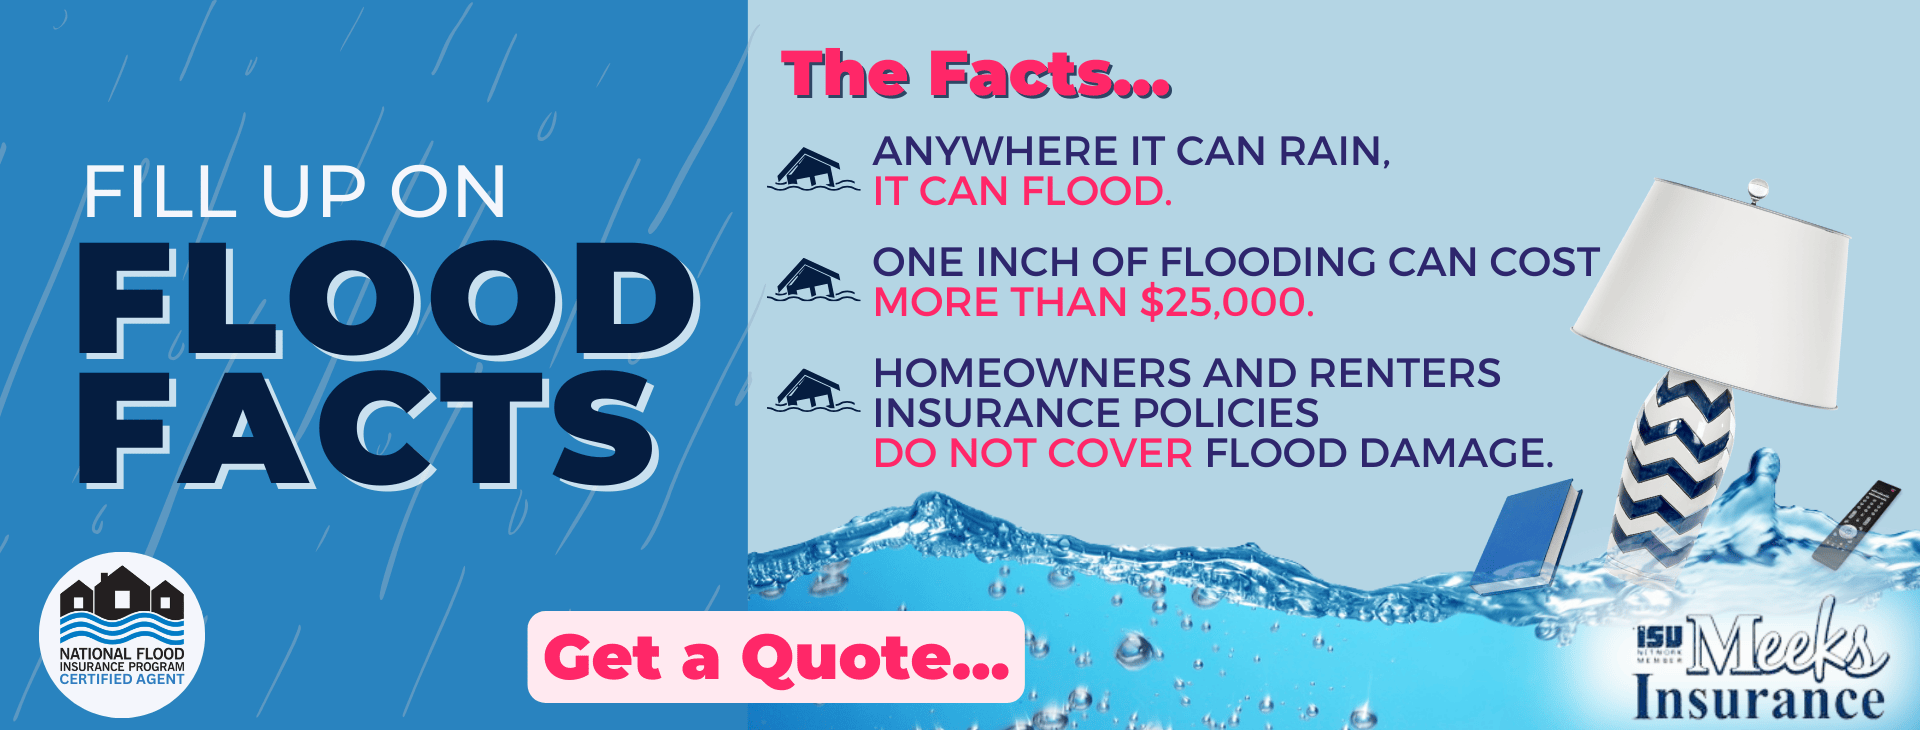 Flood facts